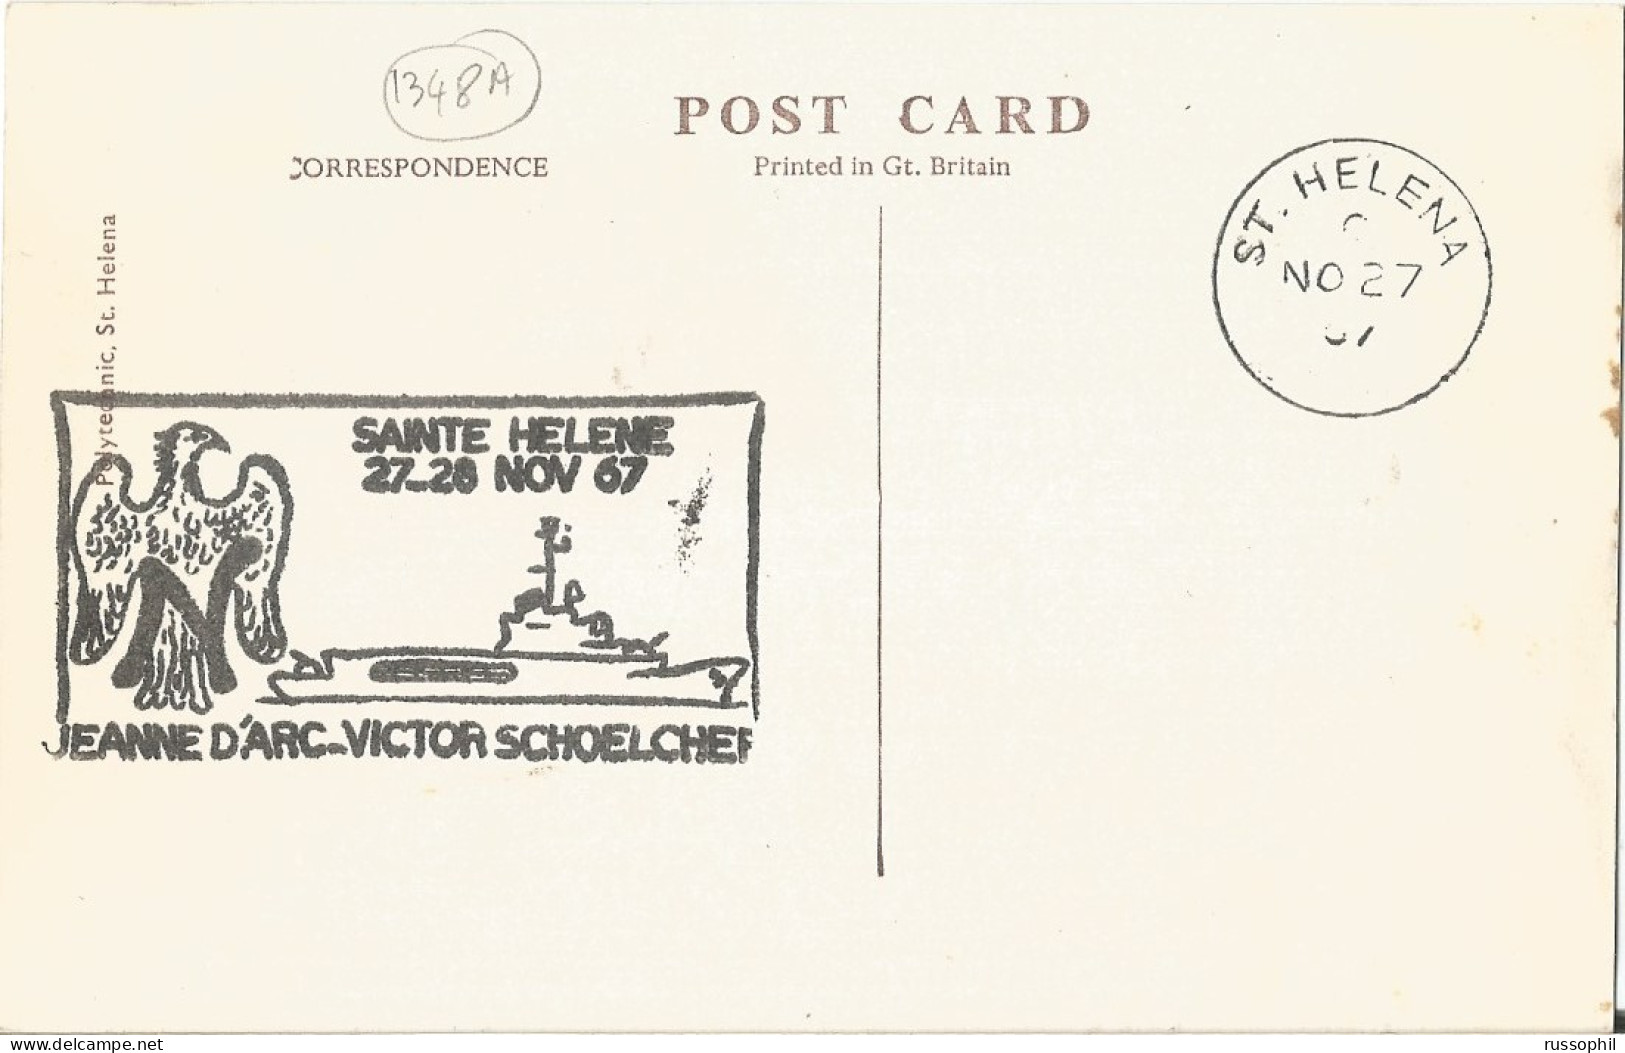 ST HELENA - LONGWOOD OLD HOUSE - PUB. POLYTECHNIC, ST  HELENA REF #3 - FRENCH WAR SHIP " JEANNE D'ARC " - 1967 - Sint-Helena